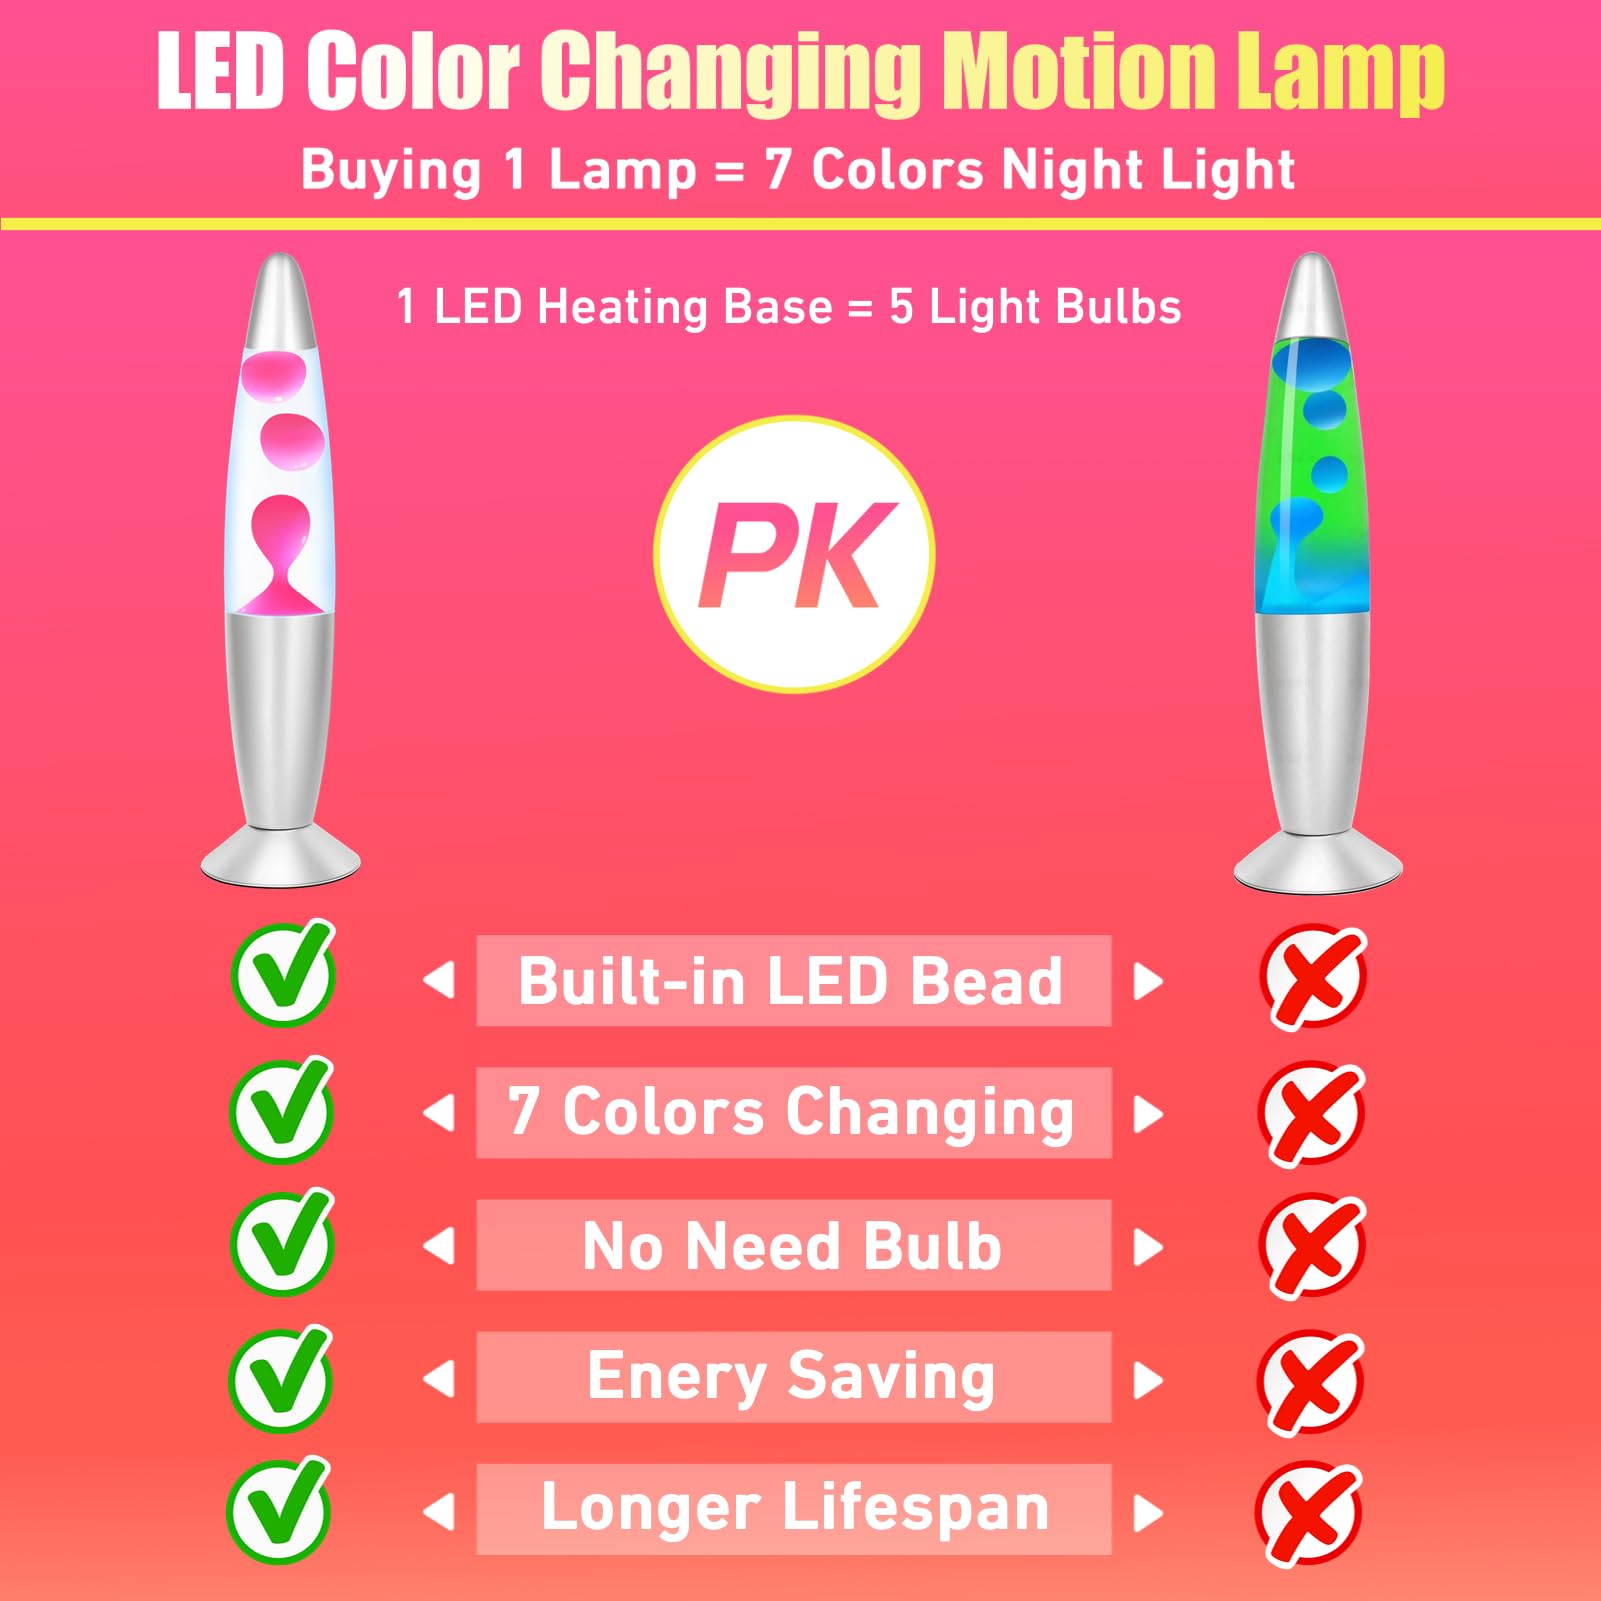 Dalavalampa Color Changing Liquid Motion Lamp, 13